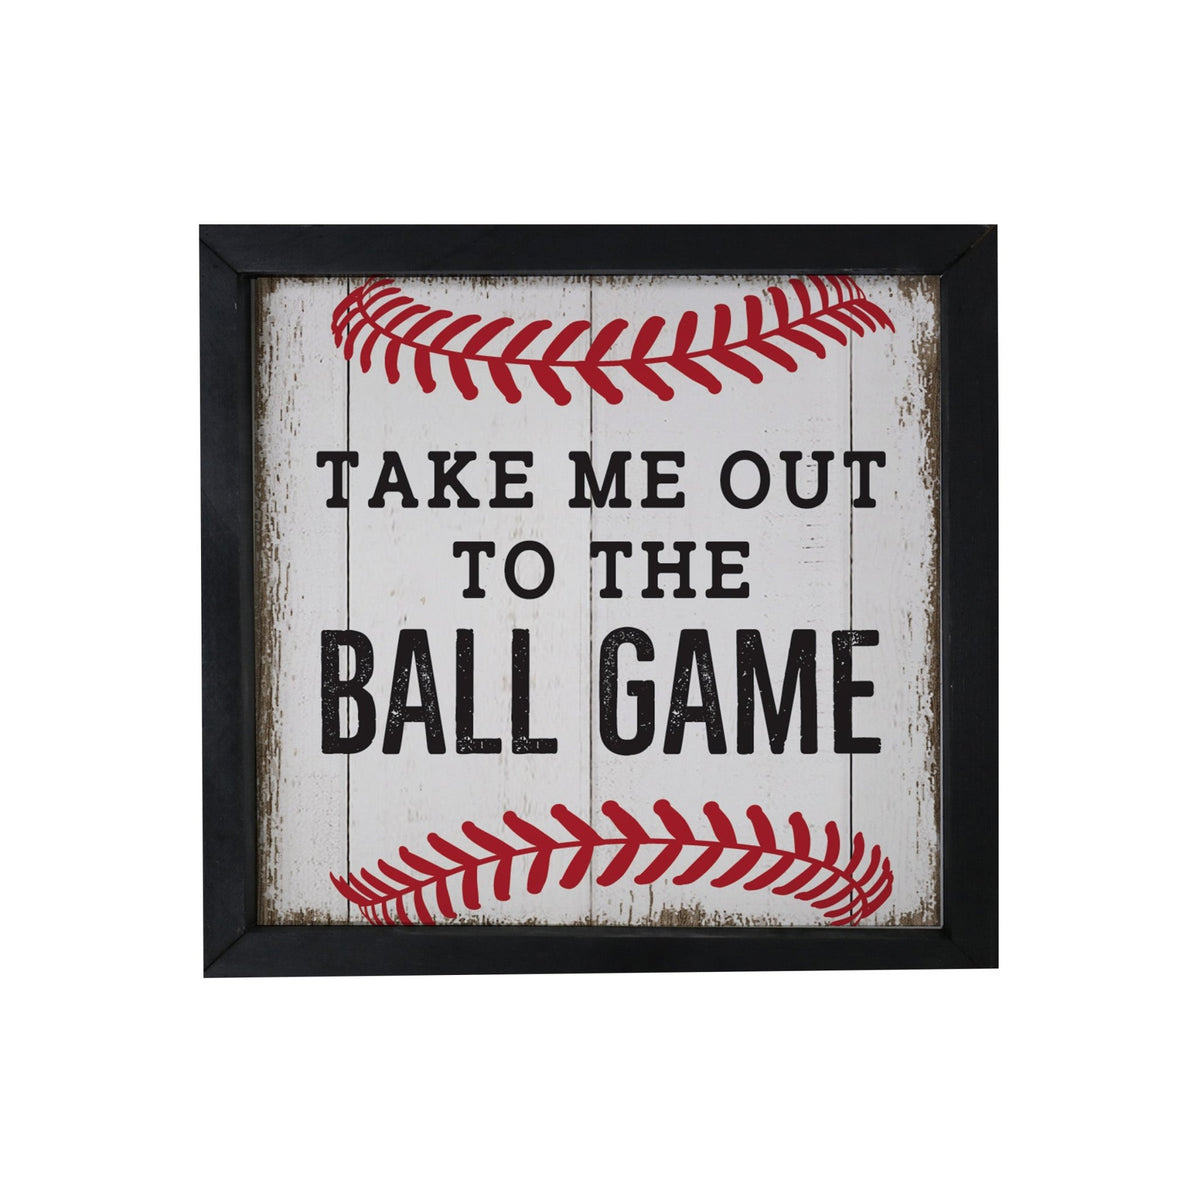 Elegant Baseball Framed Shadow Box Shelf Décor With Inspiring Bible Verses - Ball Game - LifeSong Milestones